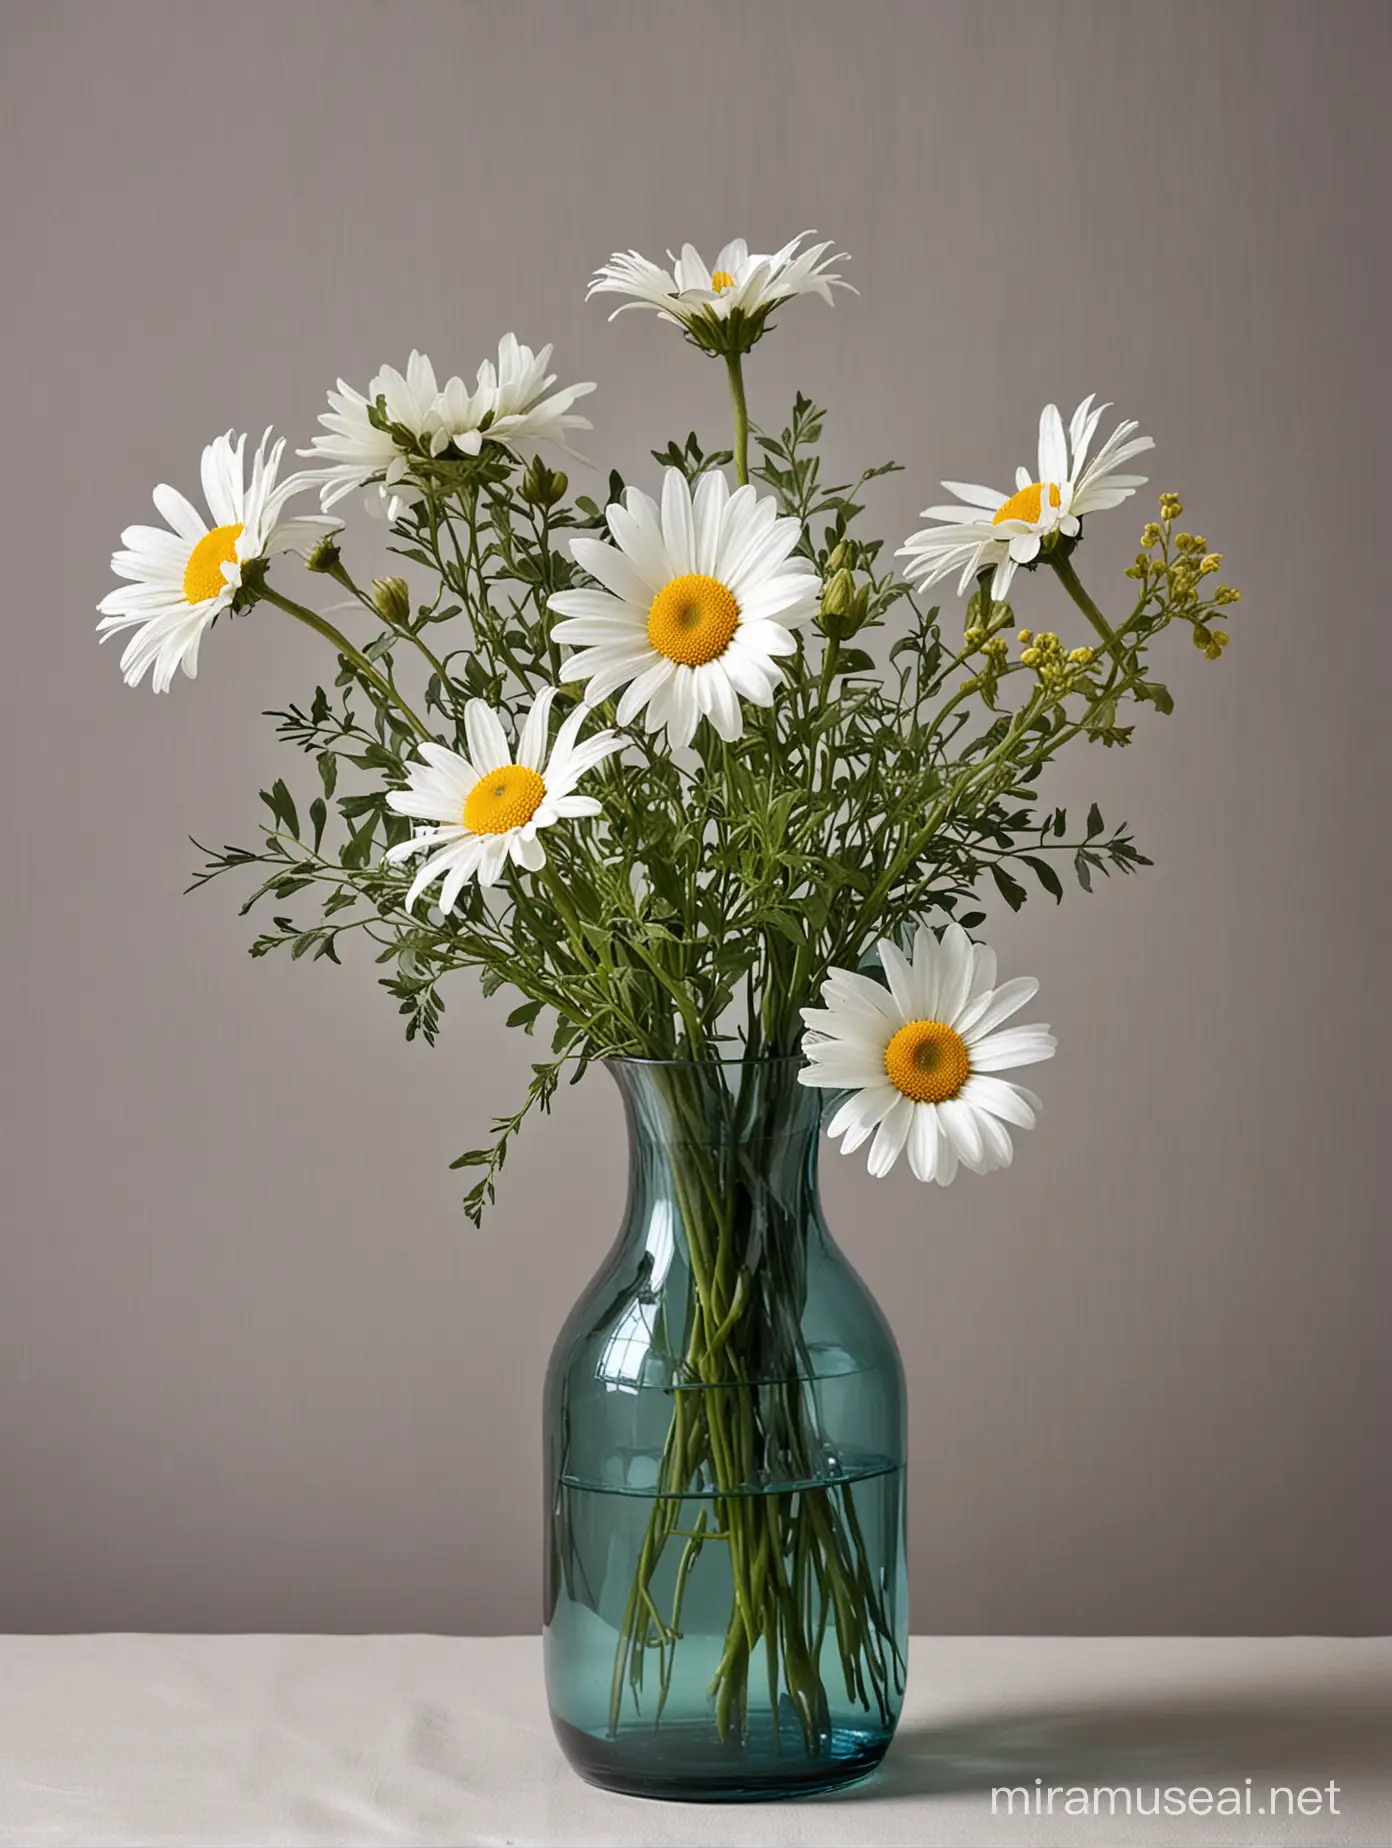 Stylish MultiColored Daisy Arrangement in Decorative BluishGreen Glass Vase